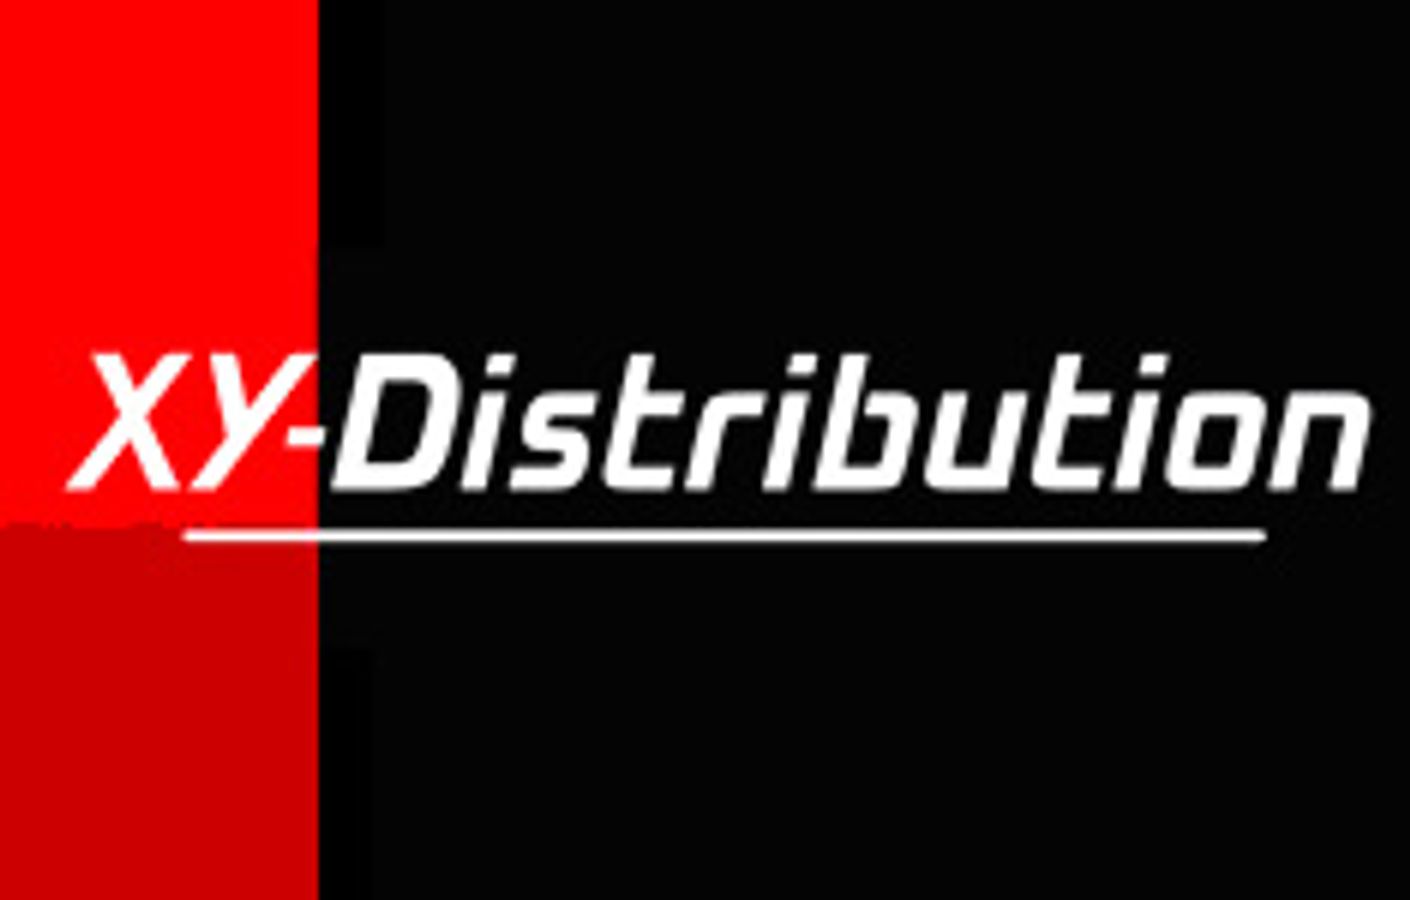 XY-Distribution